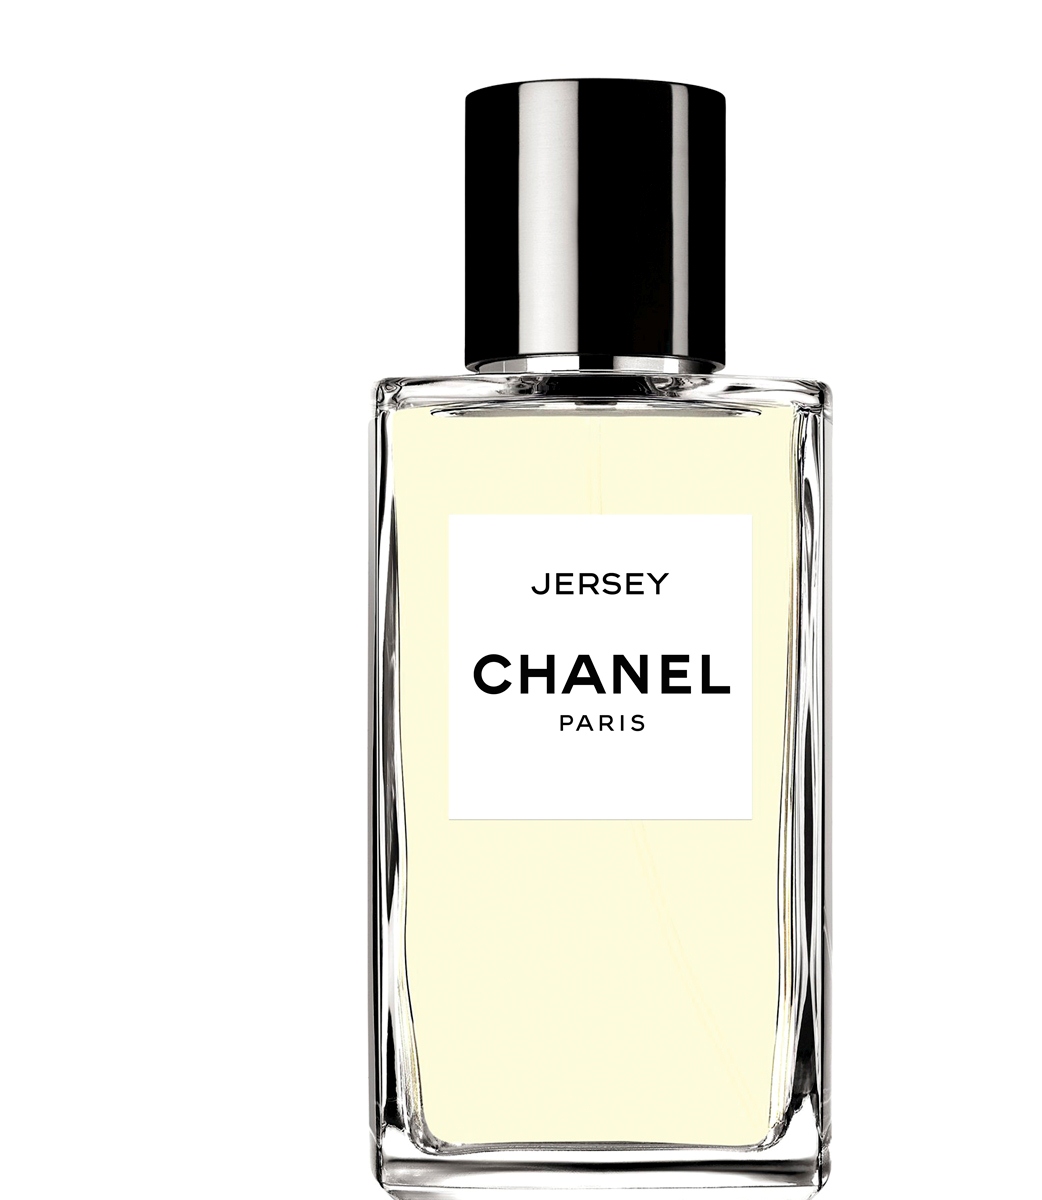 NEW FRAGRANCE REVIEW: Les Exclusifs de Chanel Jersey by Sergey Borisov -  ÇaFleureBon Perfume Blog